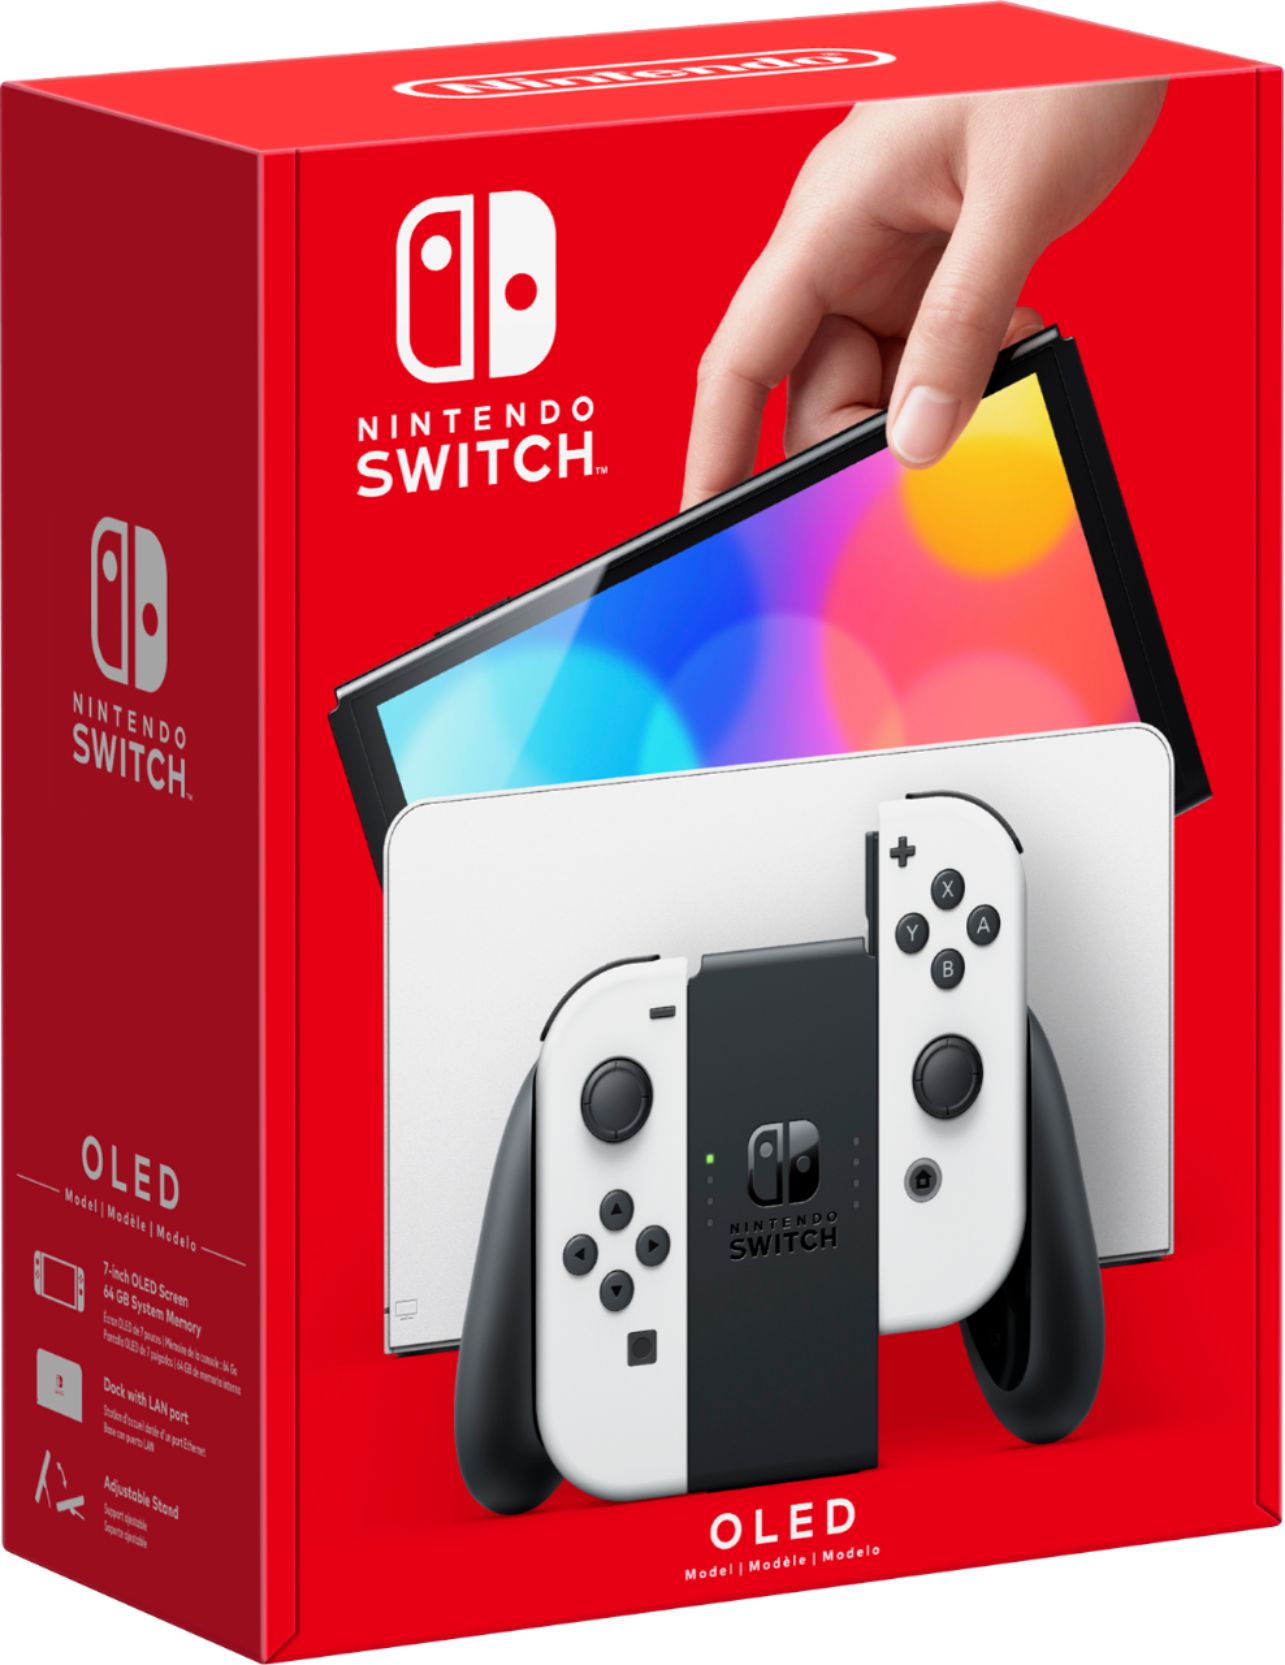 In Store TODAY / YMMV  BEST BUY - Nintendo Switch – OLED Model w/ White Joy-Con - White $349.99